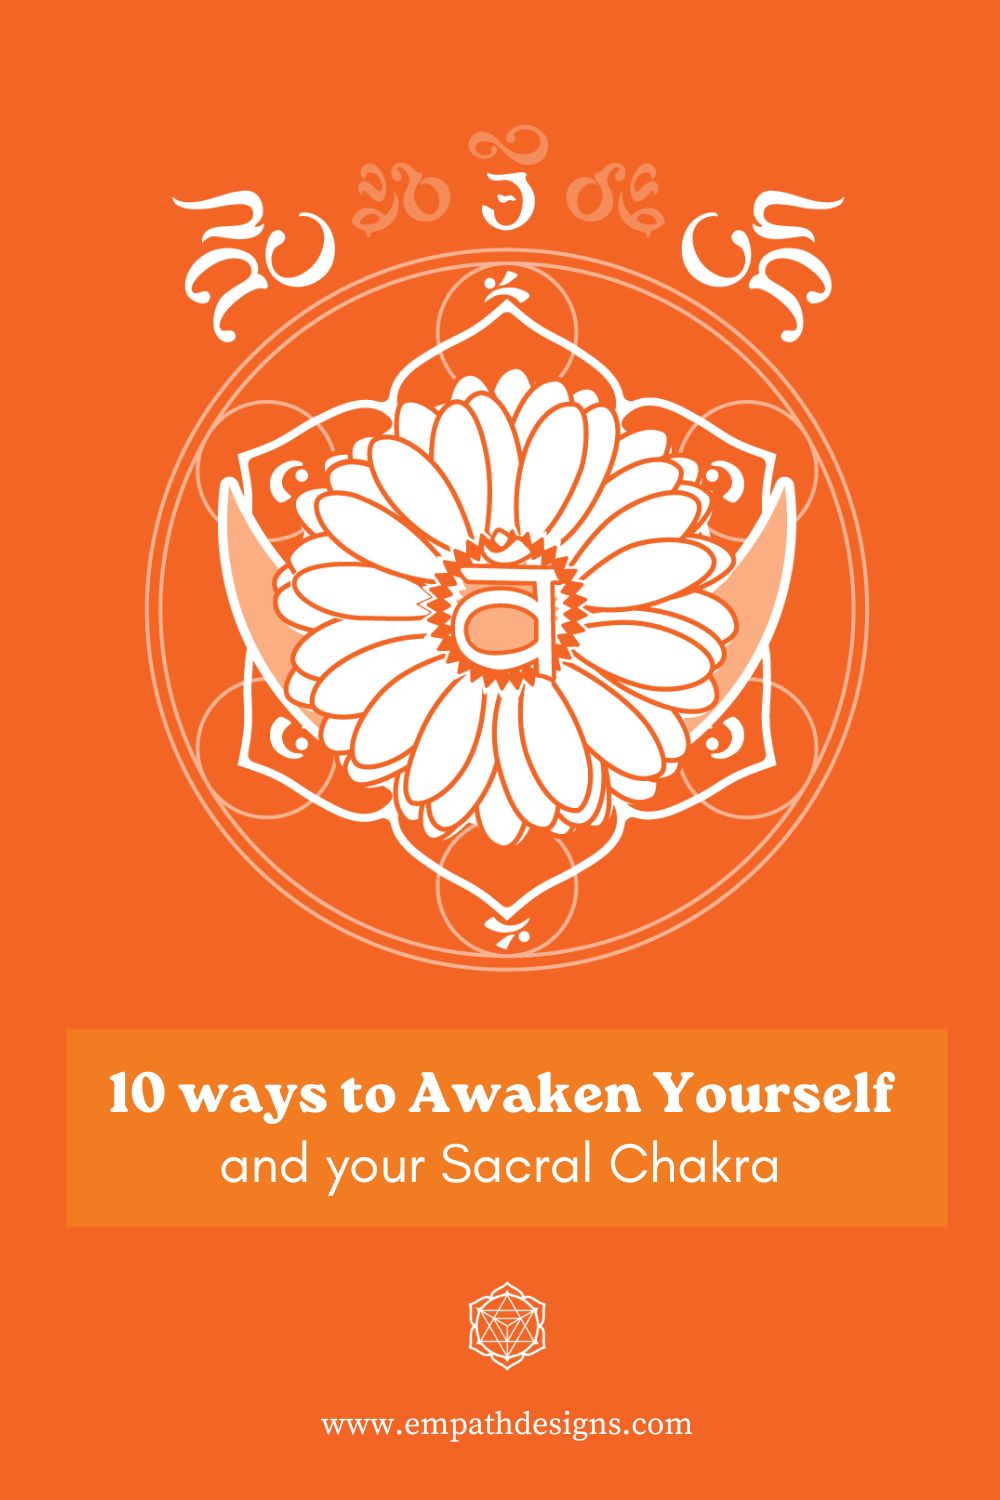 10 Ways to Awaken Yourself and Your Sacral Chakra